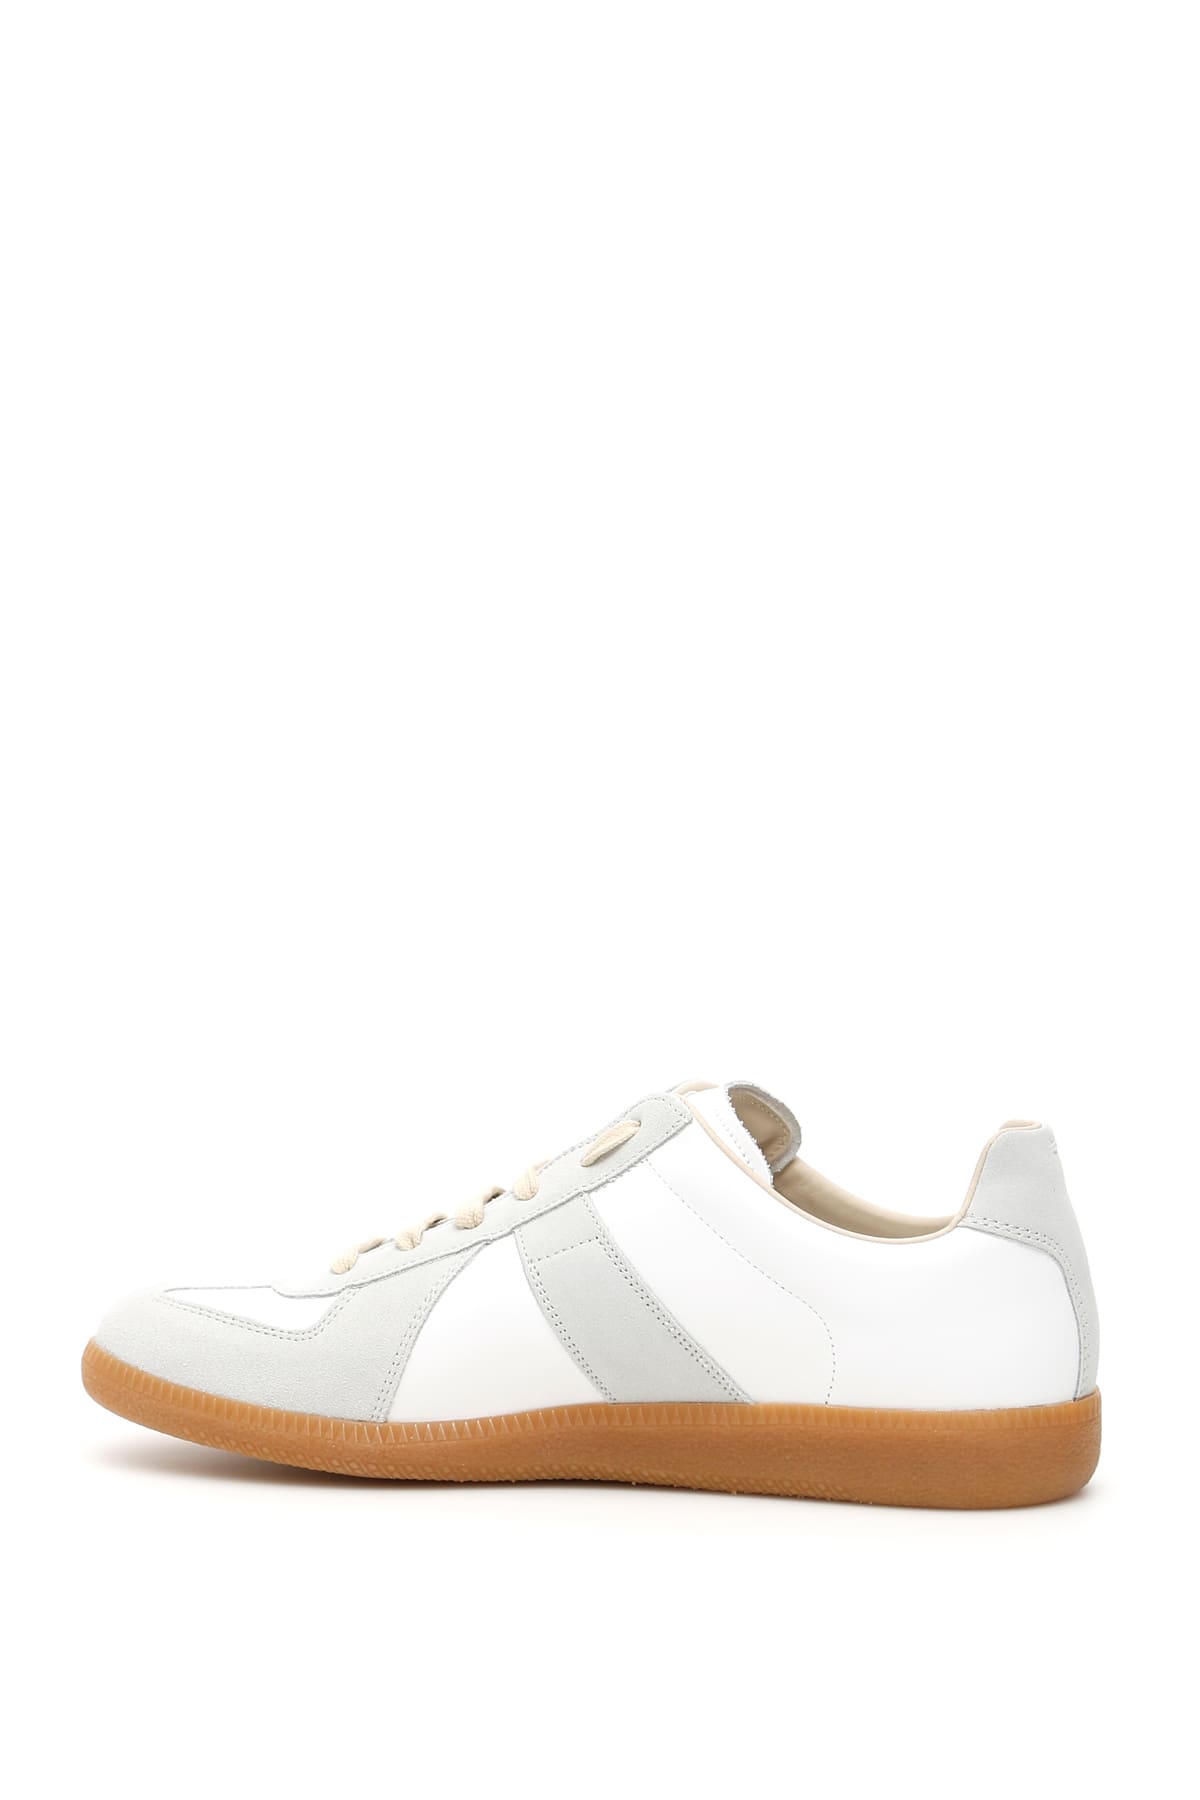 Shop Maison Margiela Replica Leather Sneakers In White/neutrals